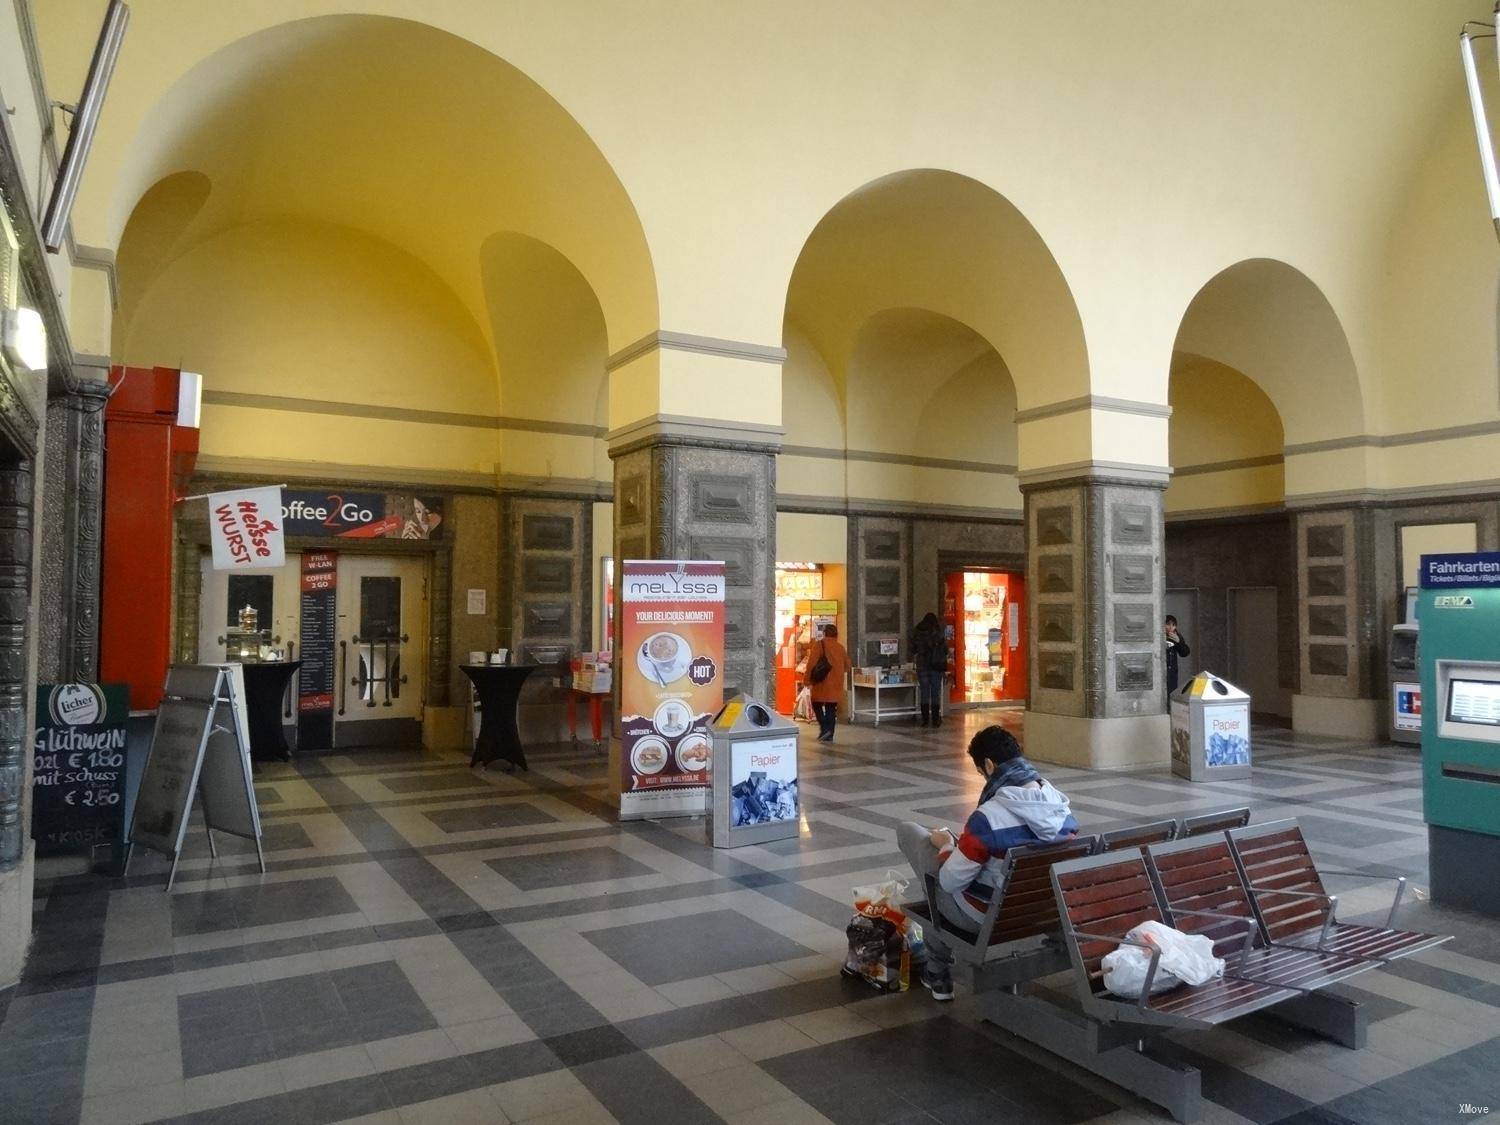 station interior photo